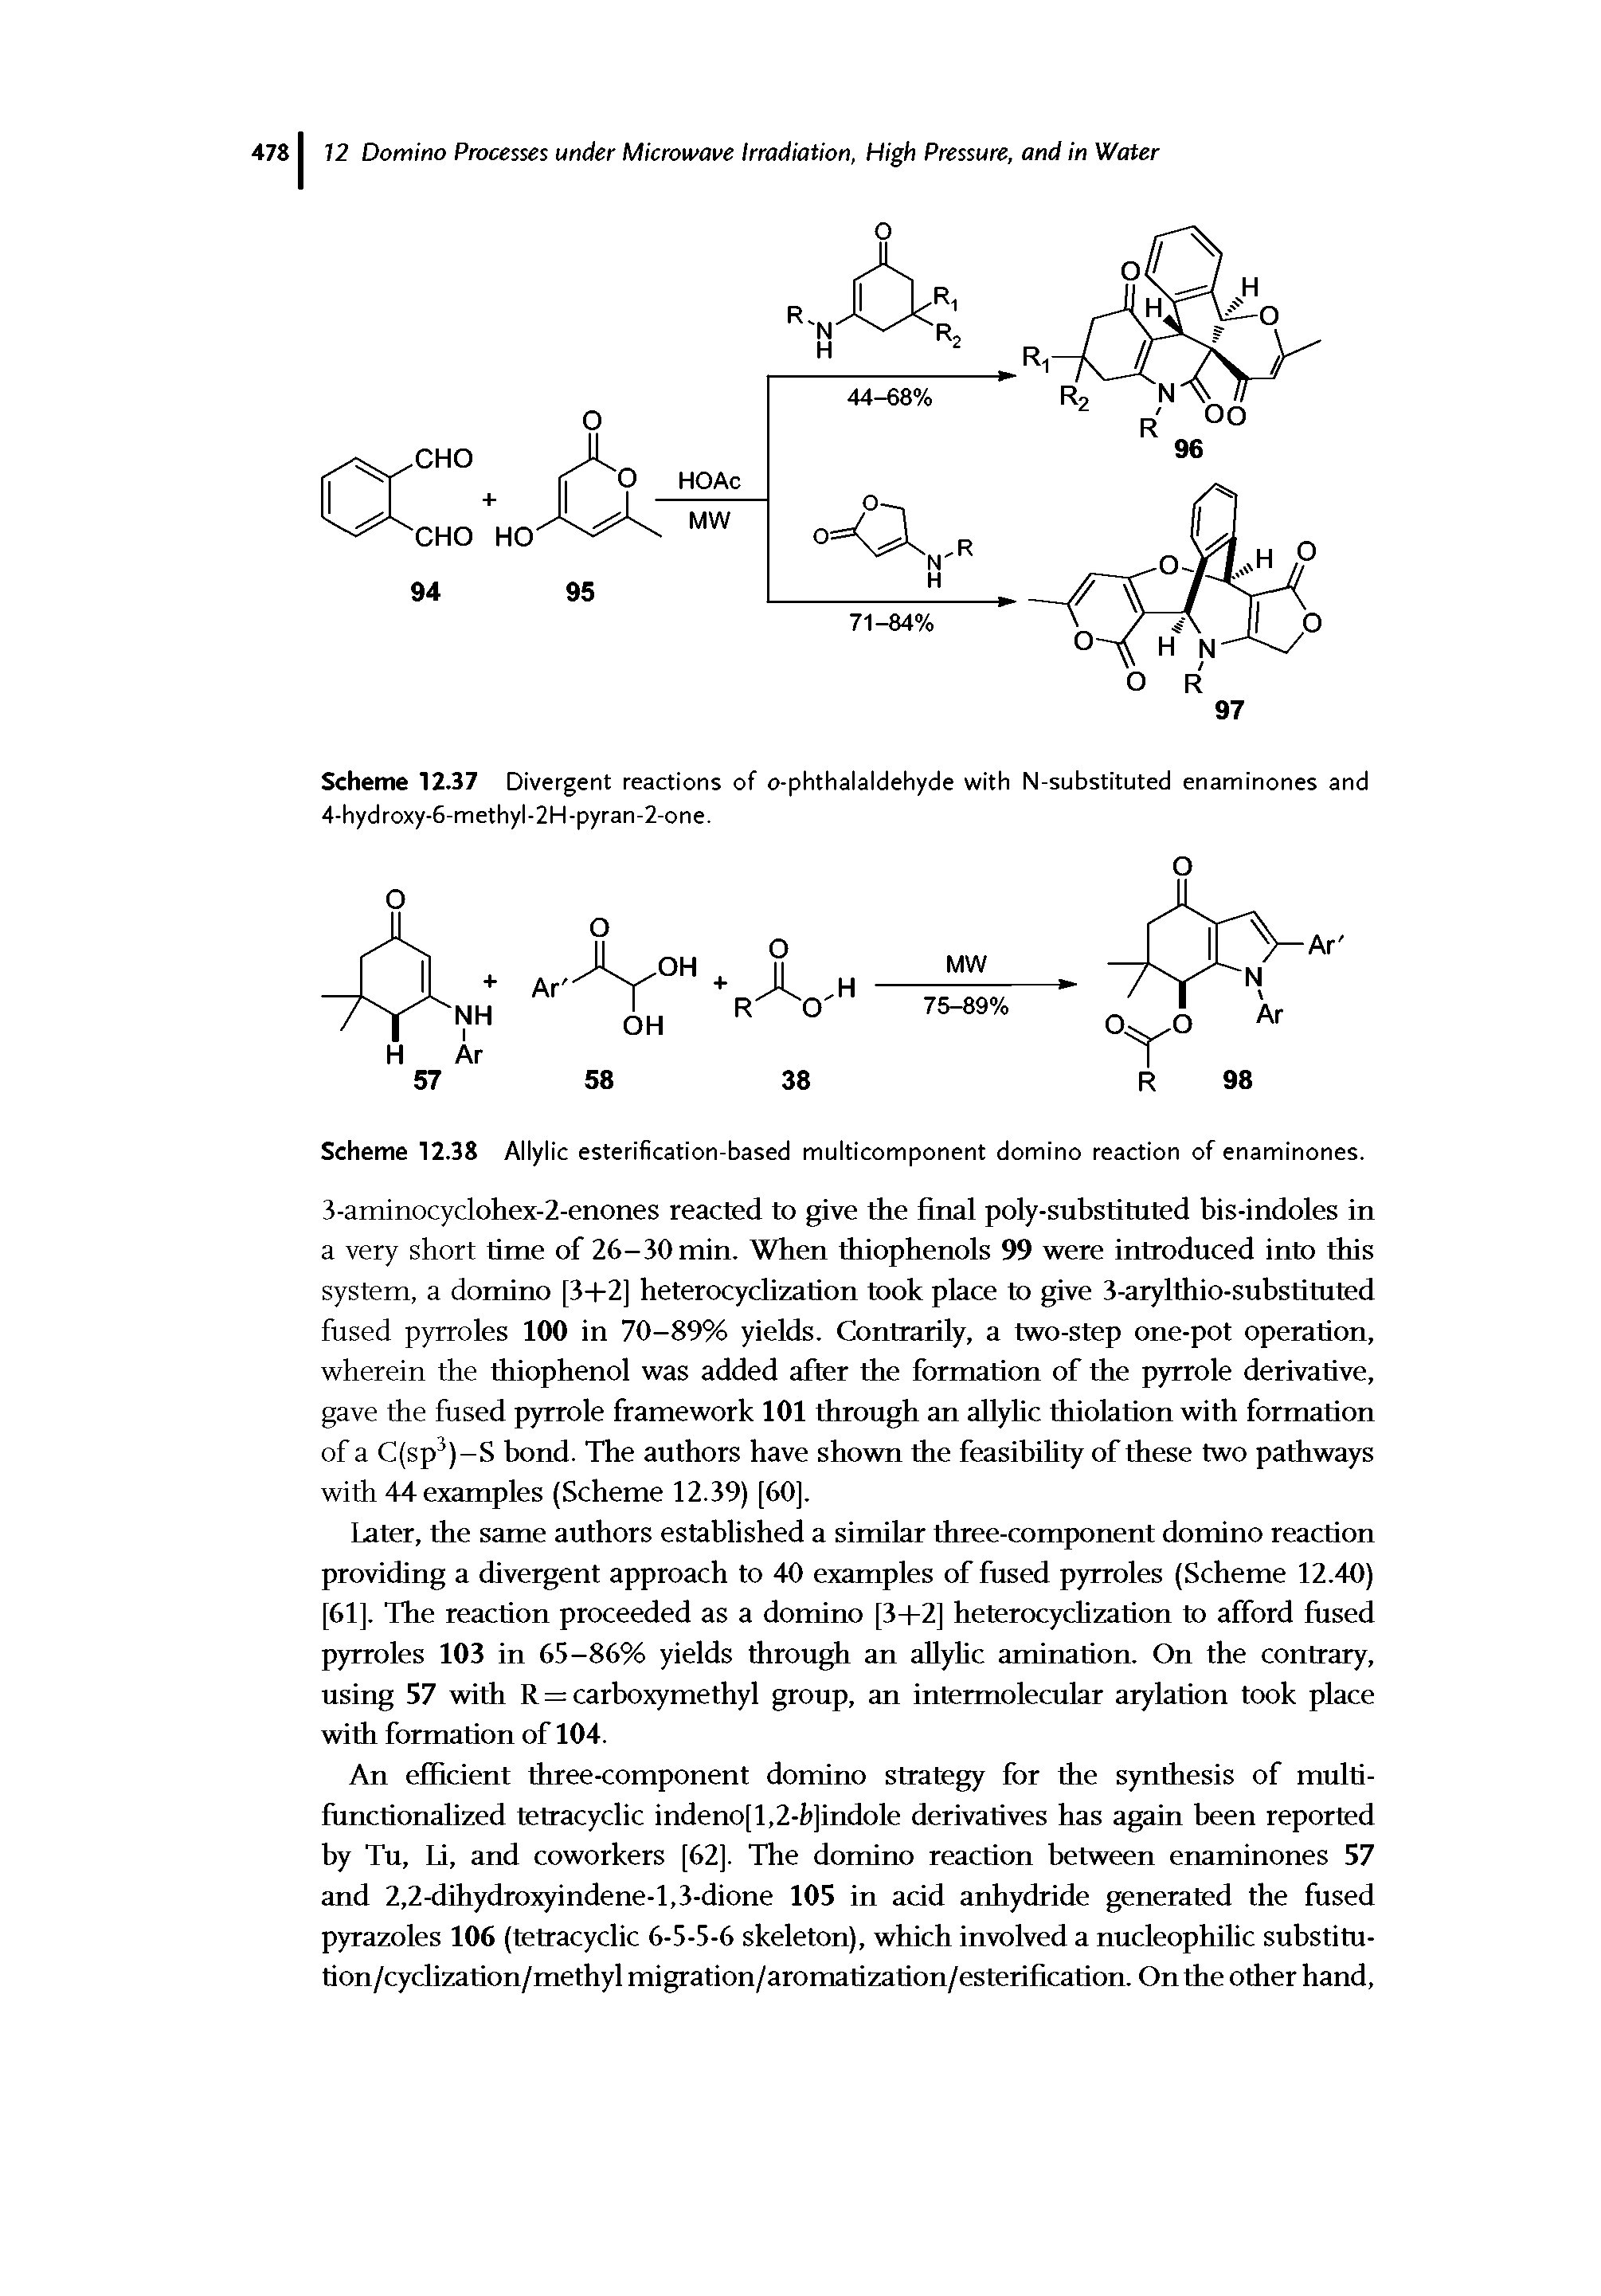 Scheme 12.38 Allylic esterification-based multicomponent domino reaction of enaminones.